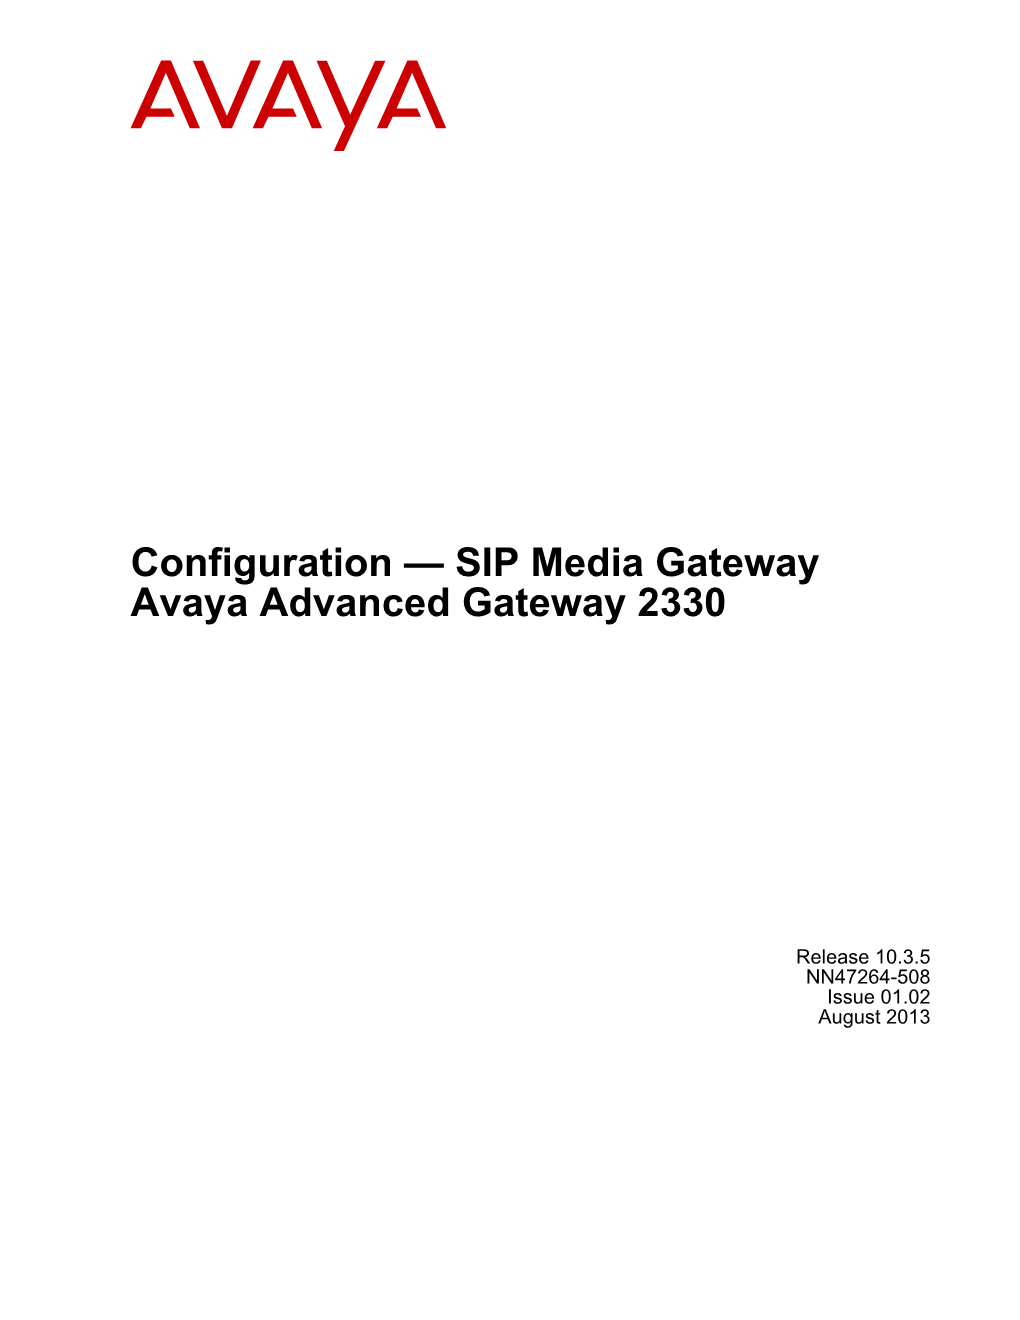 SIP Media Gateway Avaya Advanced Gateway 2330